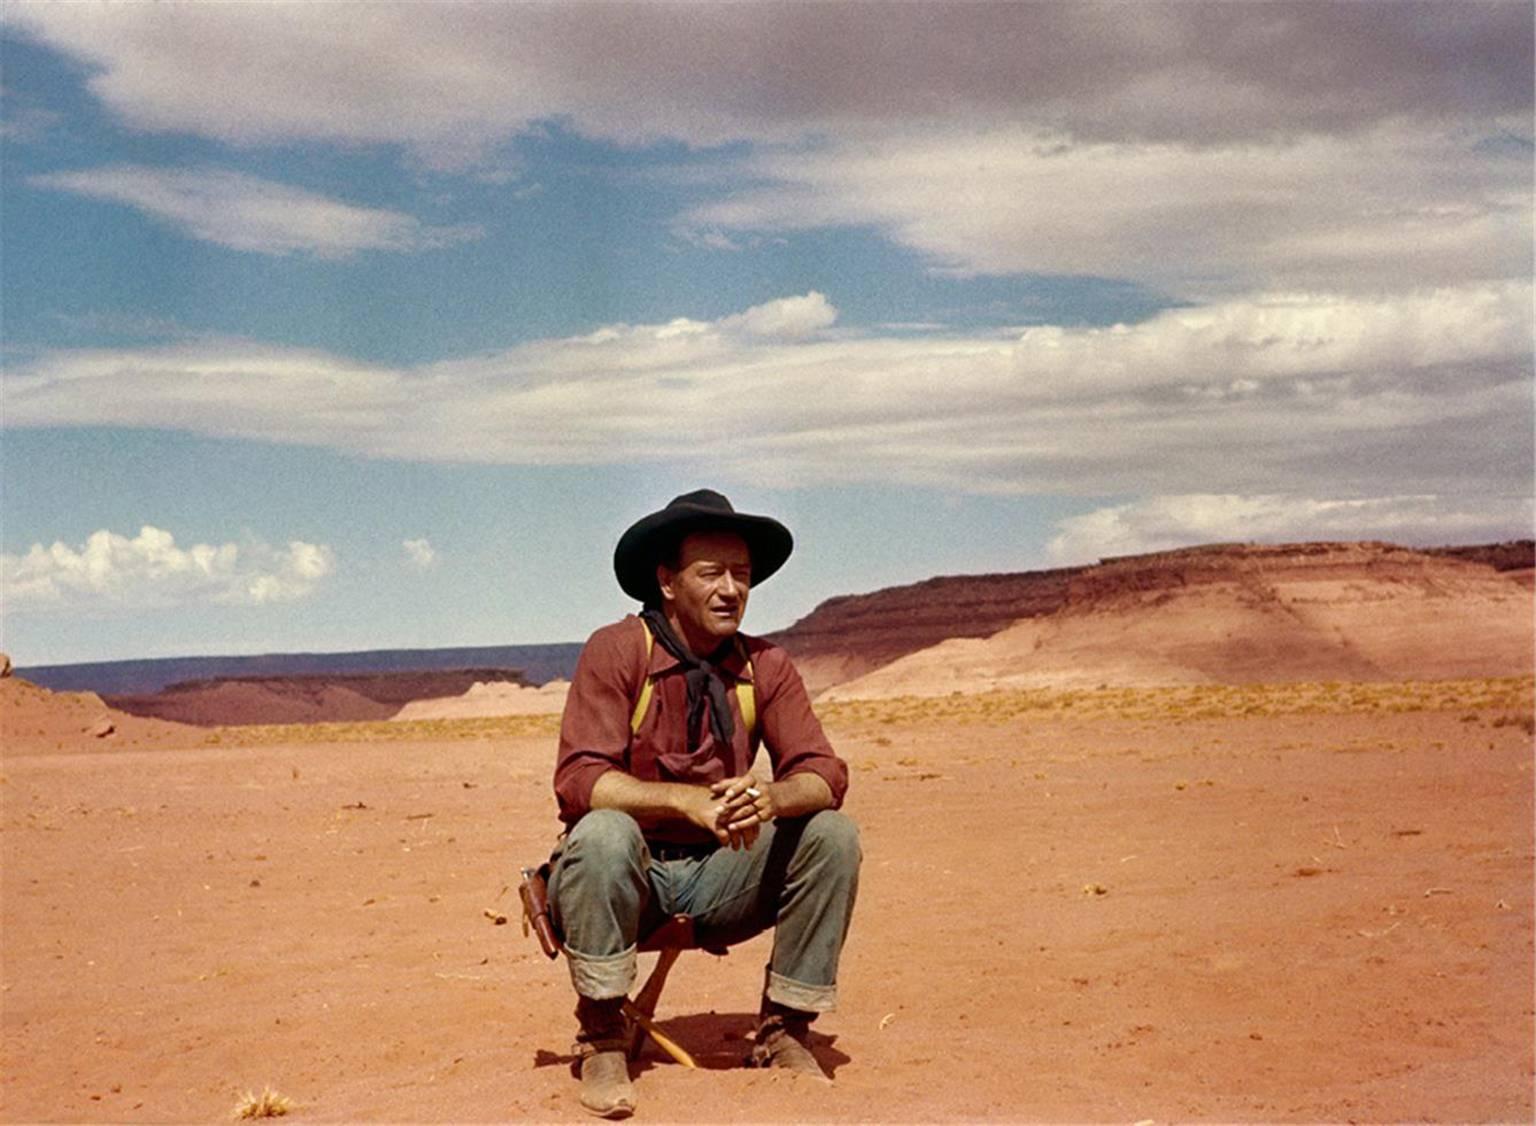 John Wayne, during the filming of "The Searchers,” Monument Valley, Arizona-Utah